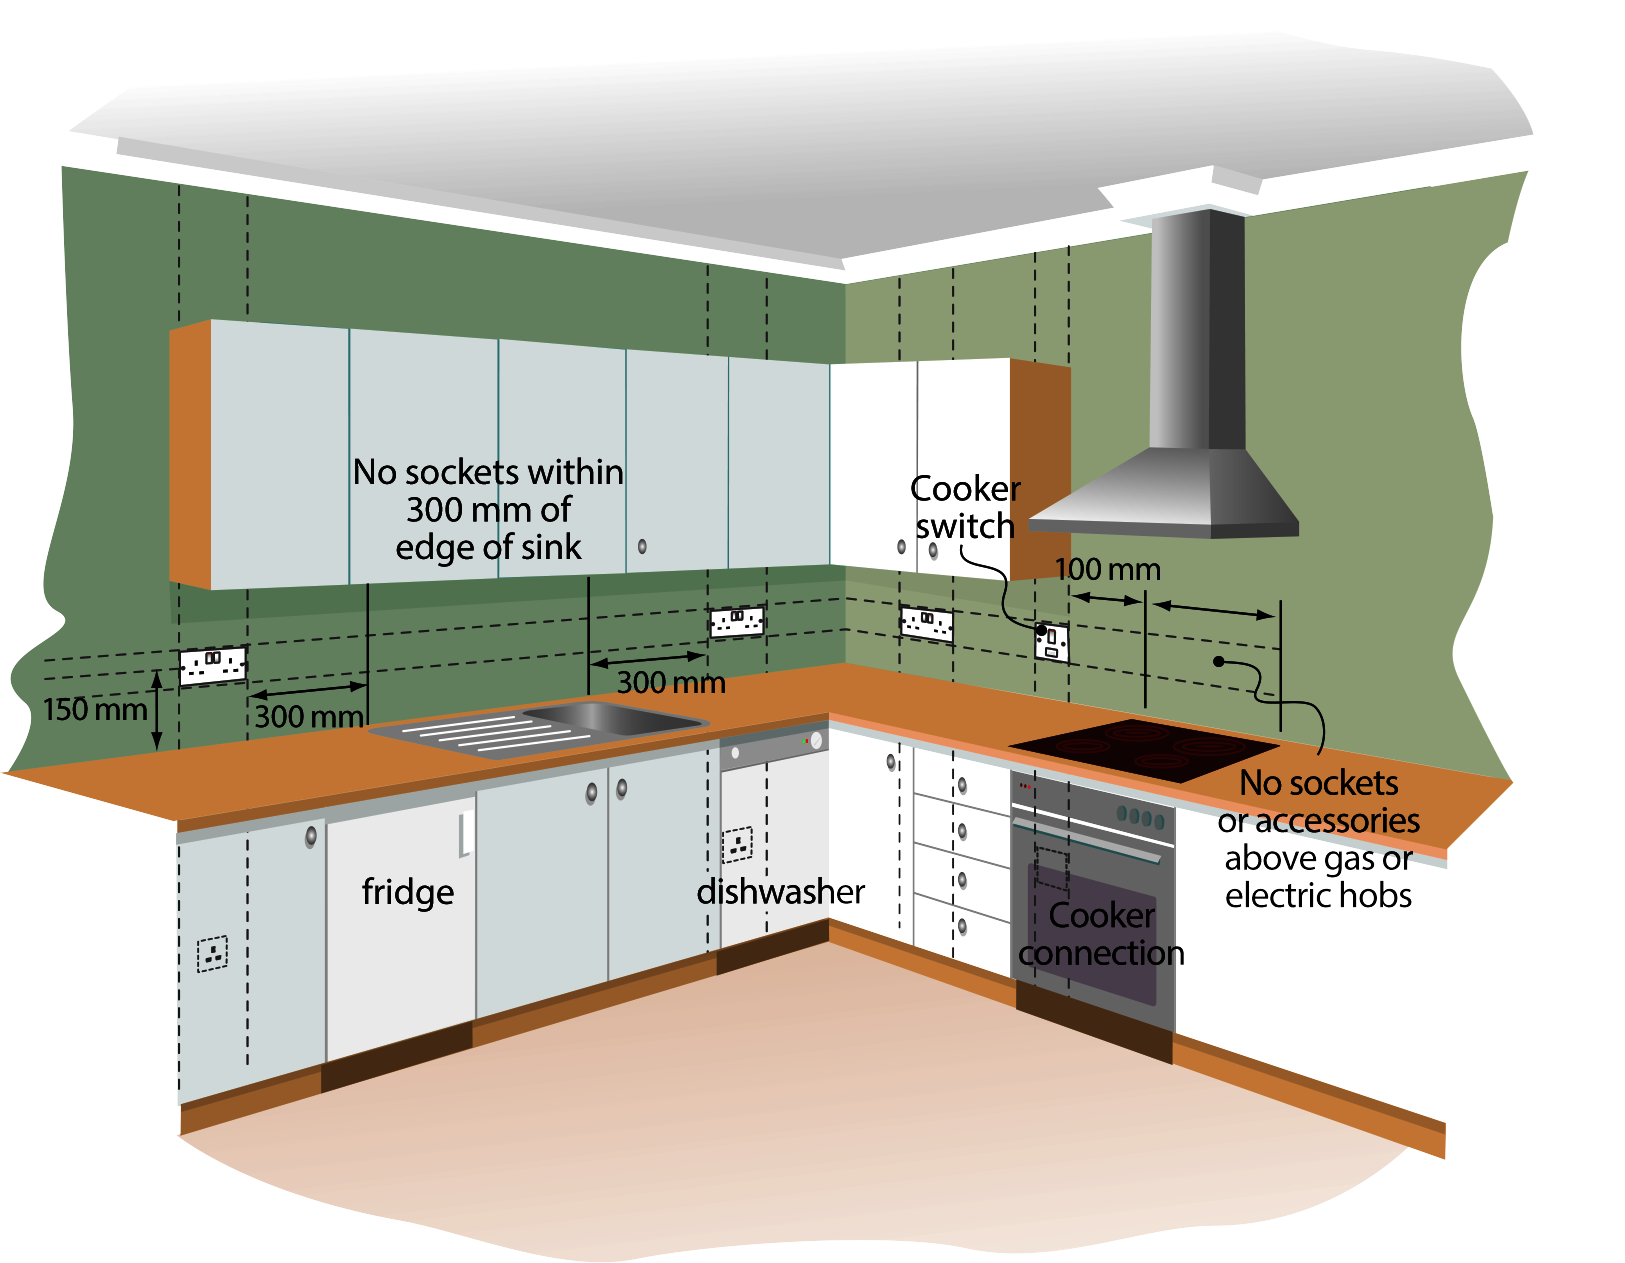 Стандарты розеток на кухне. Расположение розеток на кухне. Размещение розеток на кухне. Расположение разе ок на кухне. Расположение розеток на угловой кухне.